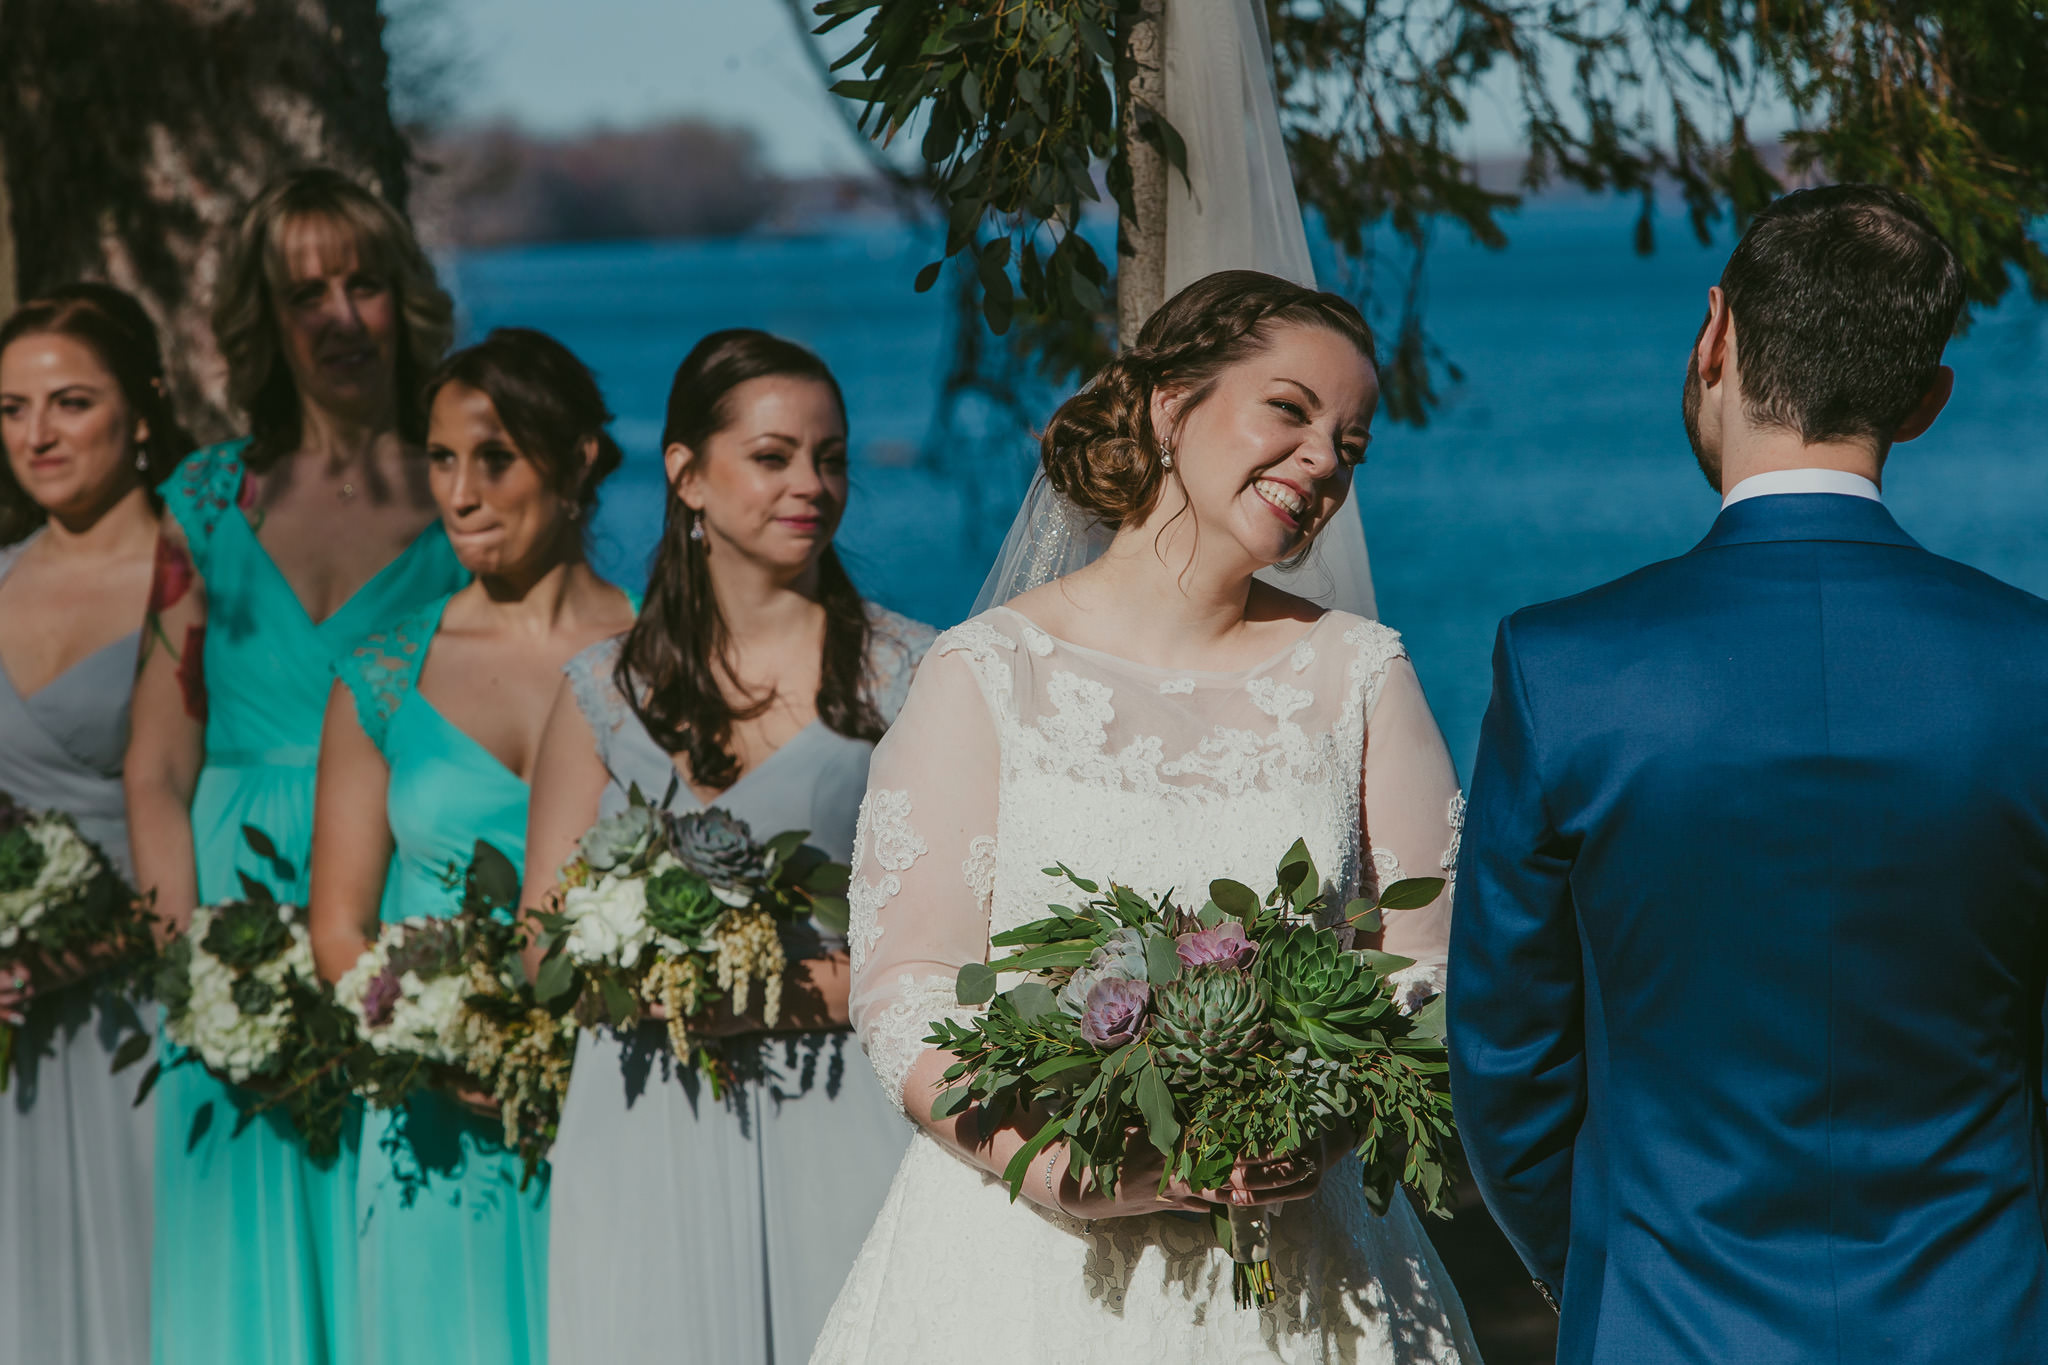 A happy bride gazes lovingly at her groom at Glen Foerd on the Delaware